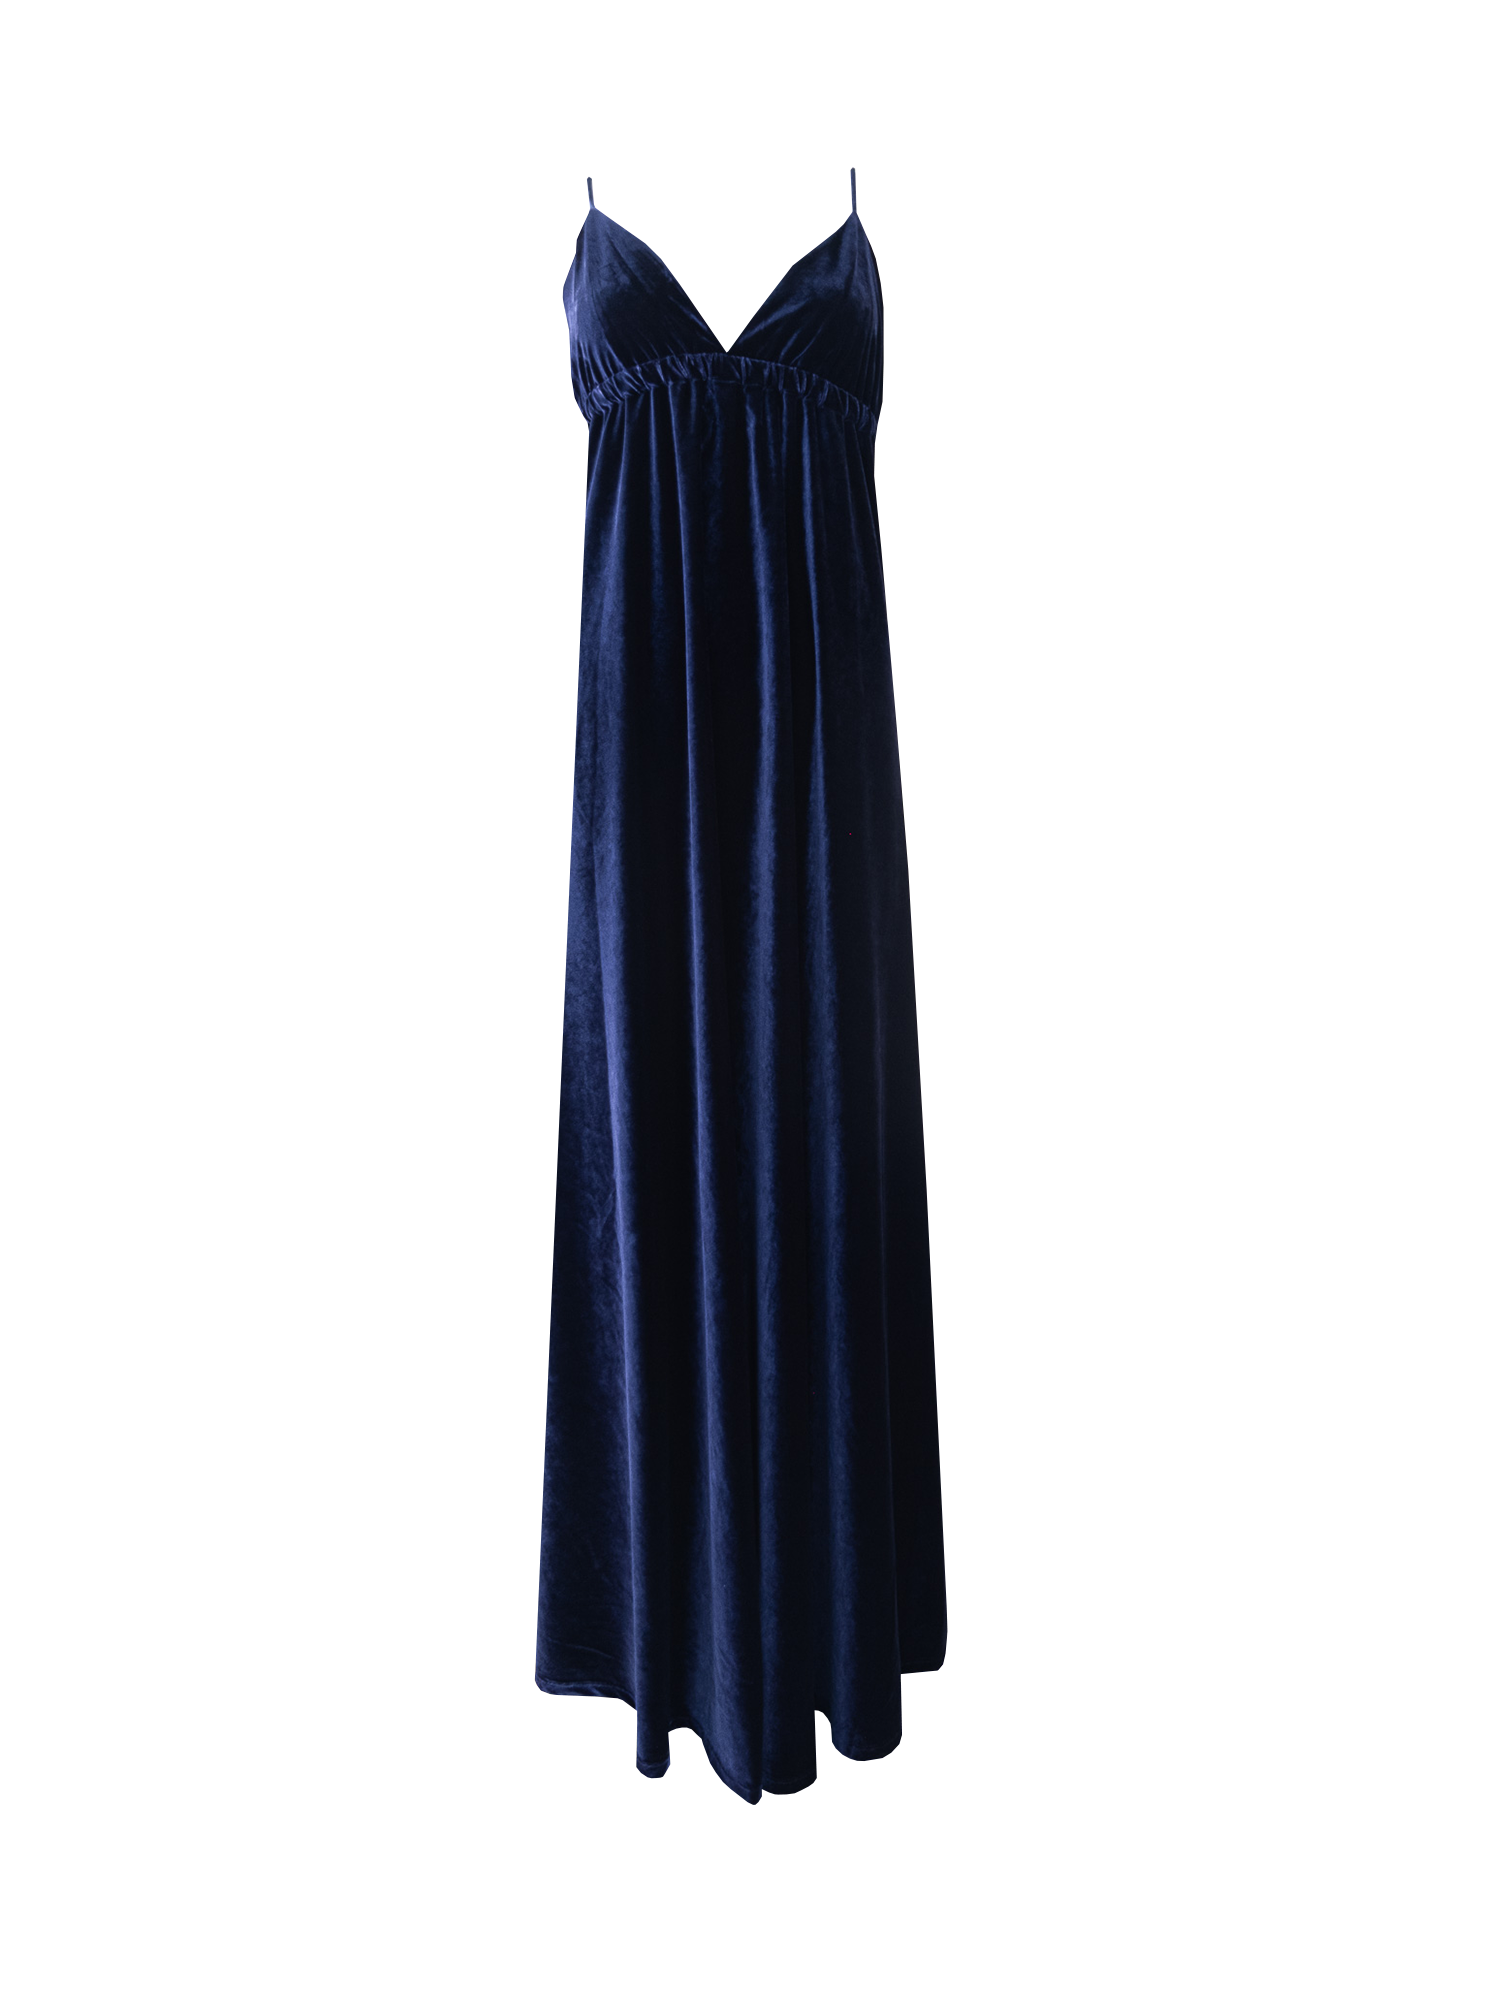 MICOL - long blue chenille dress